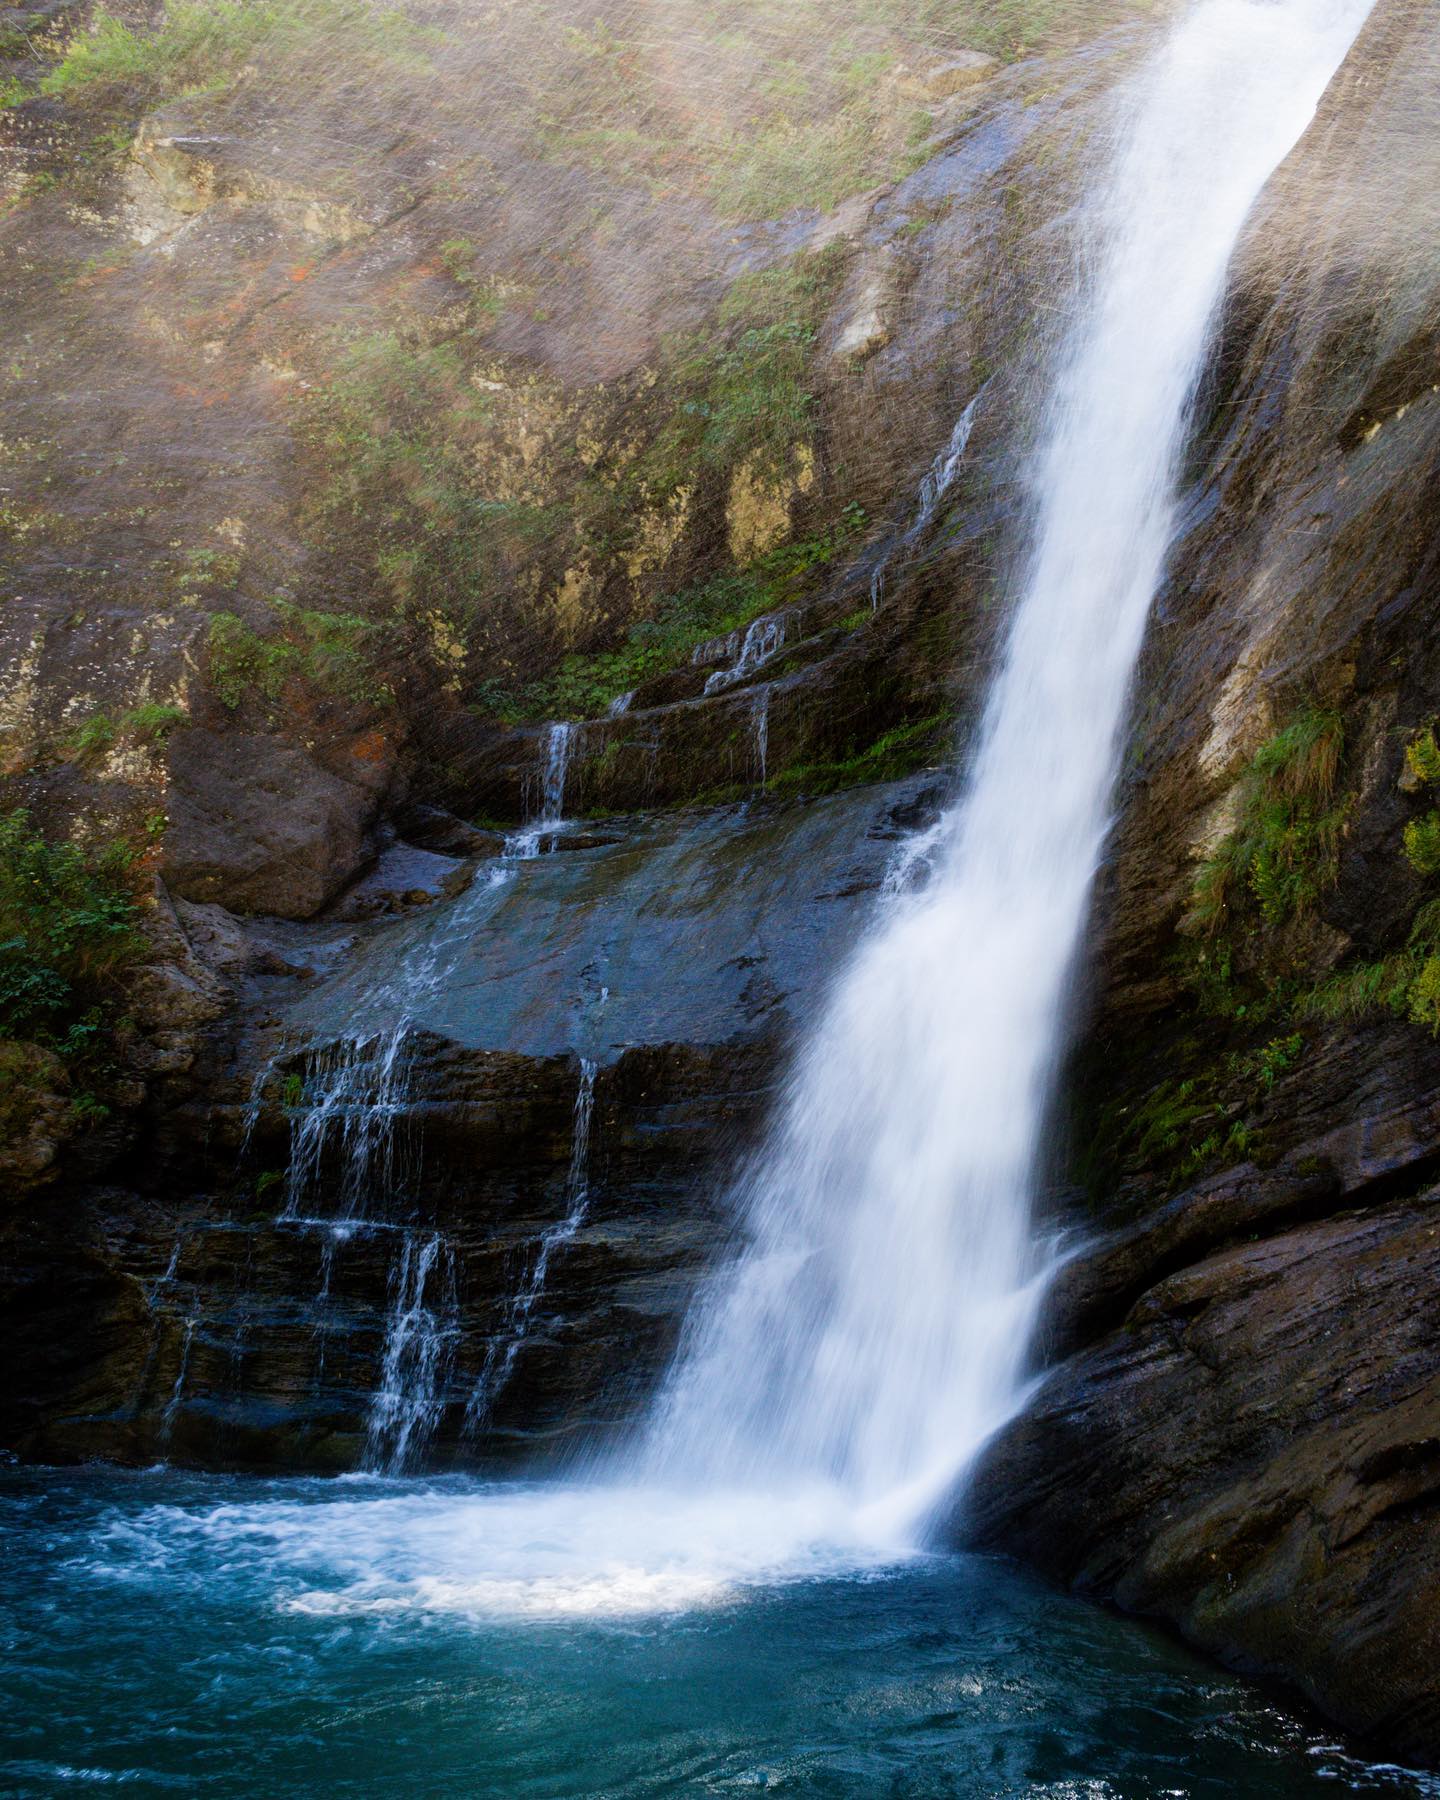 Alagna Valsesia

#alagna 
#alagnavalsesia 
#waterfall 
#blue 
#water 
#otro 
#alps 
#canon